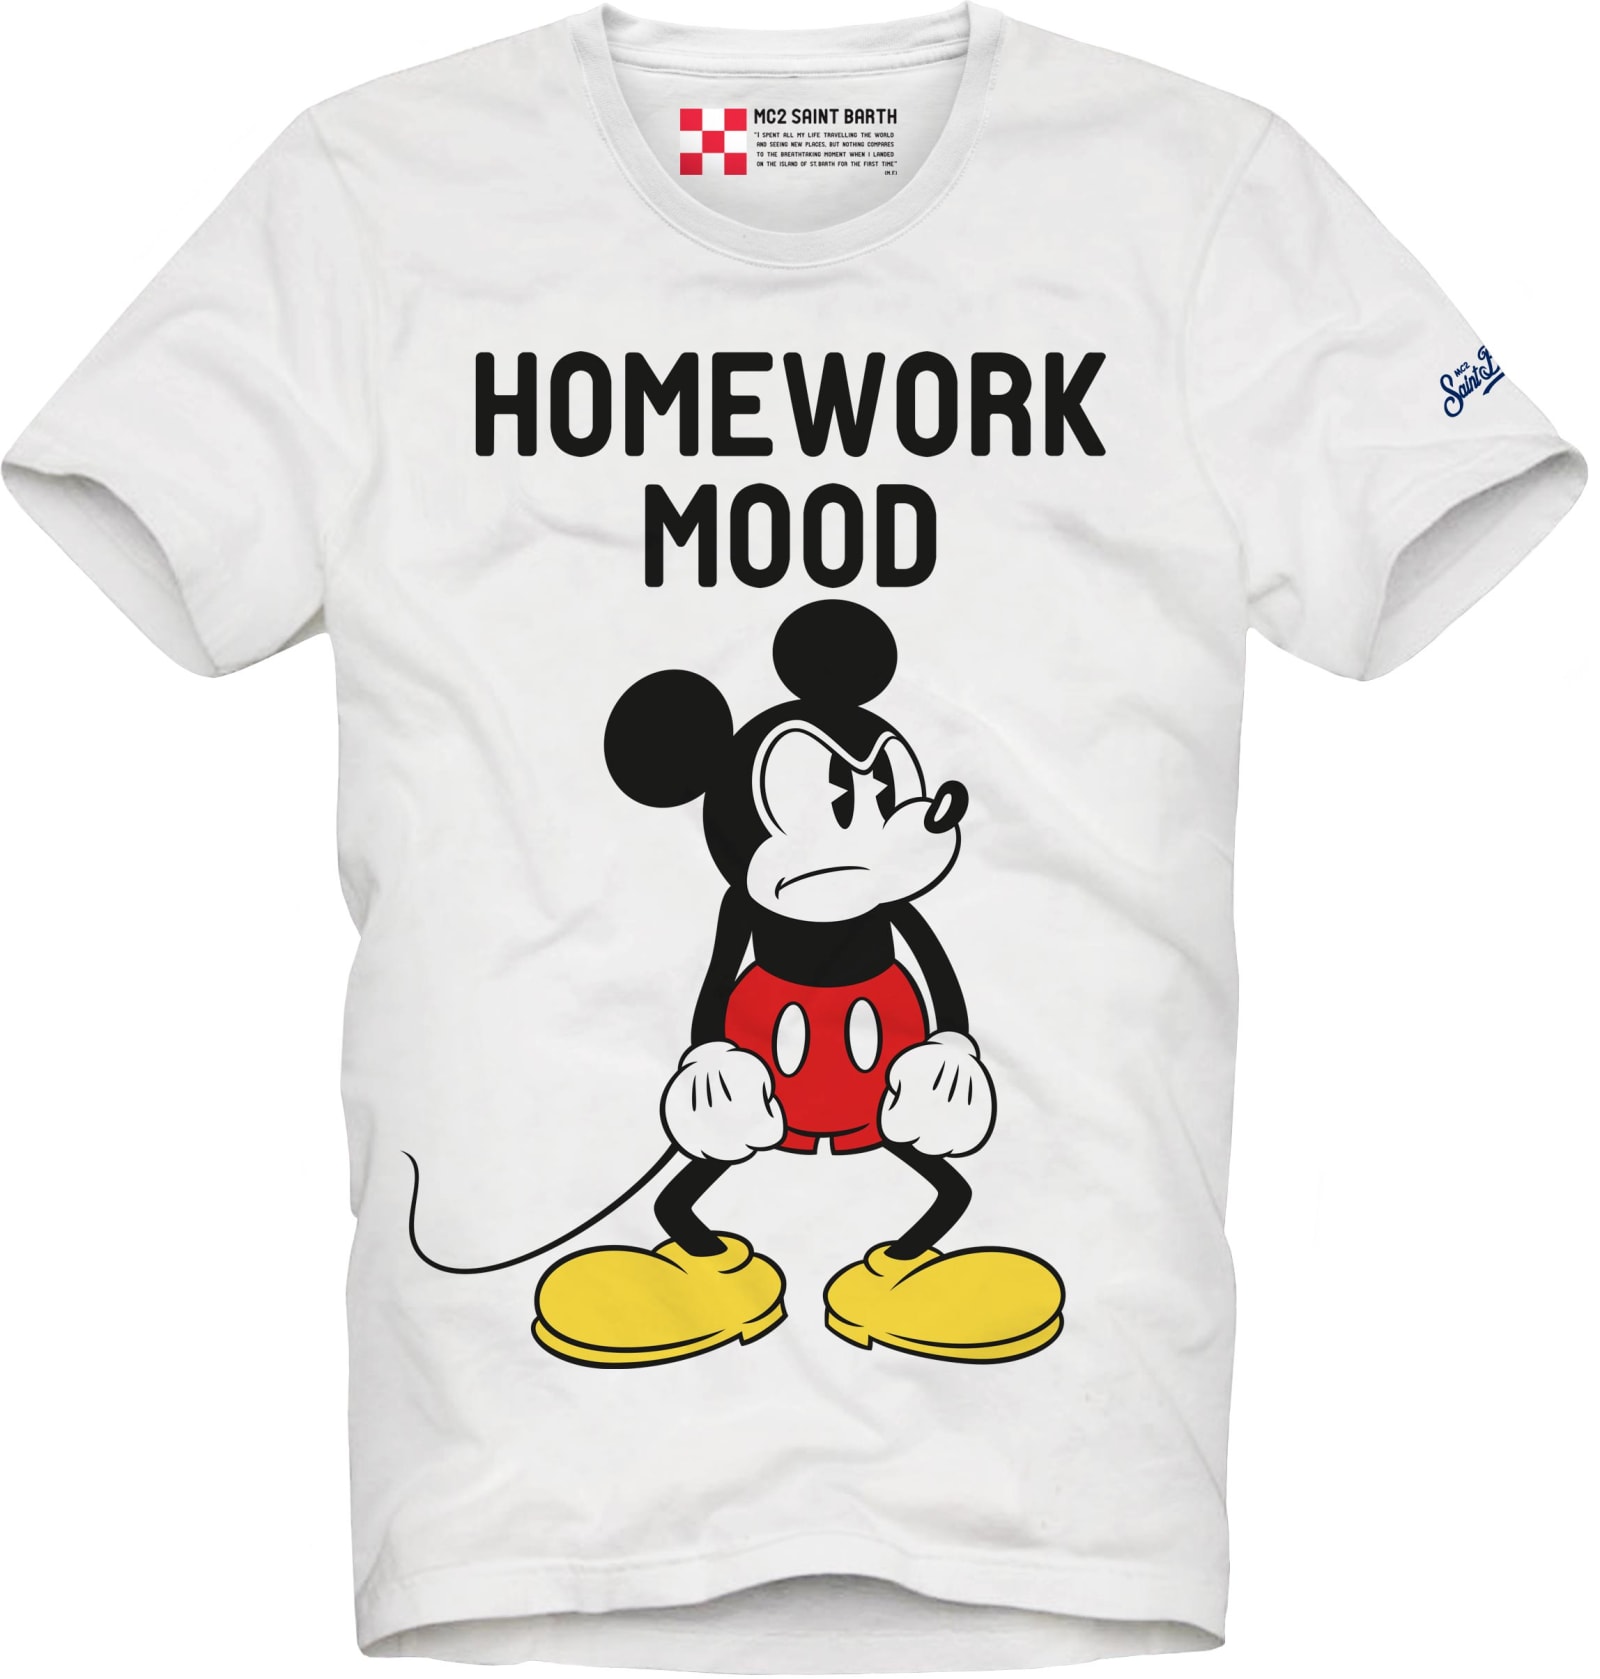 Mc2 Saint Barth Kids' Mickey Mouse T-shirt Boy Homework Mood